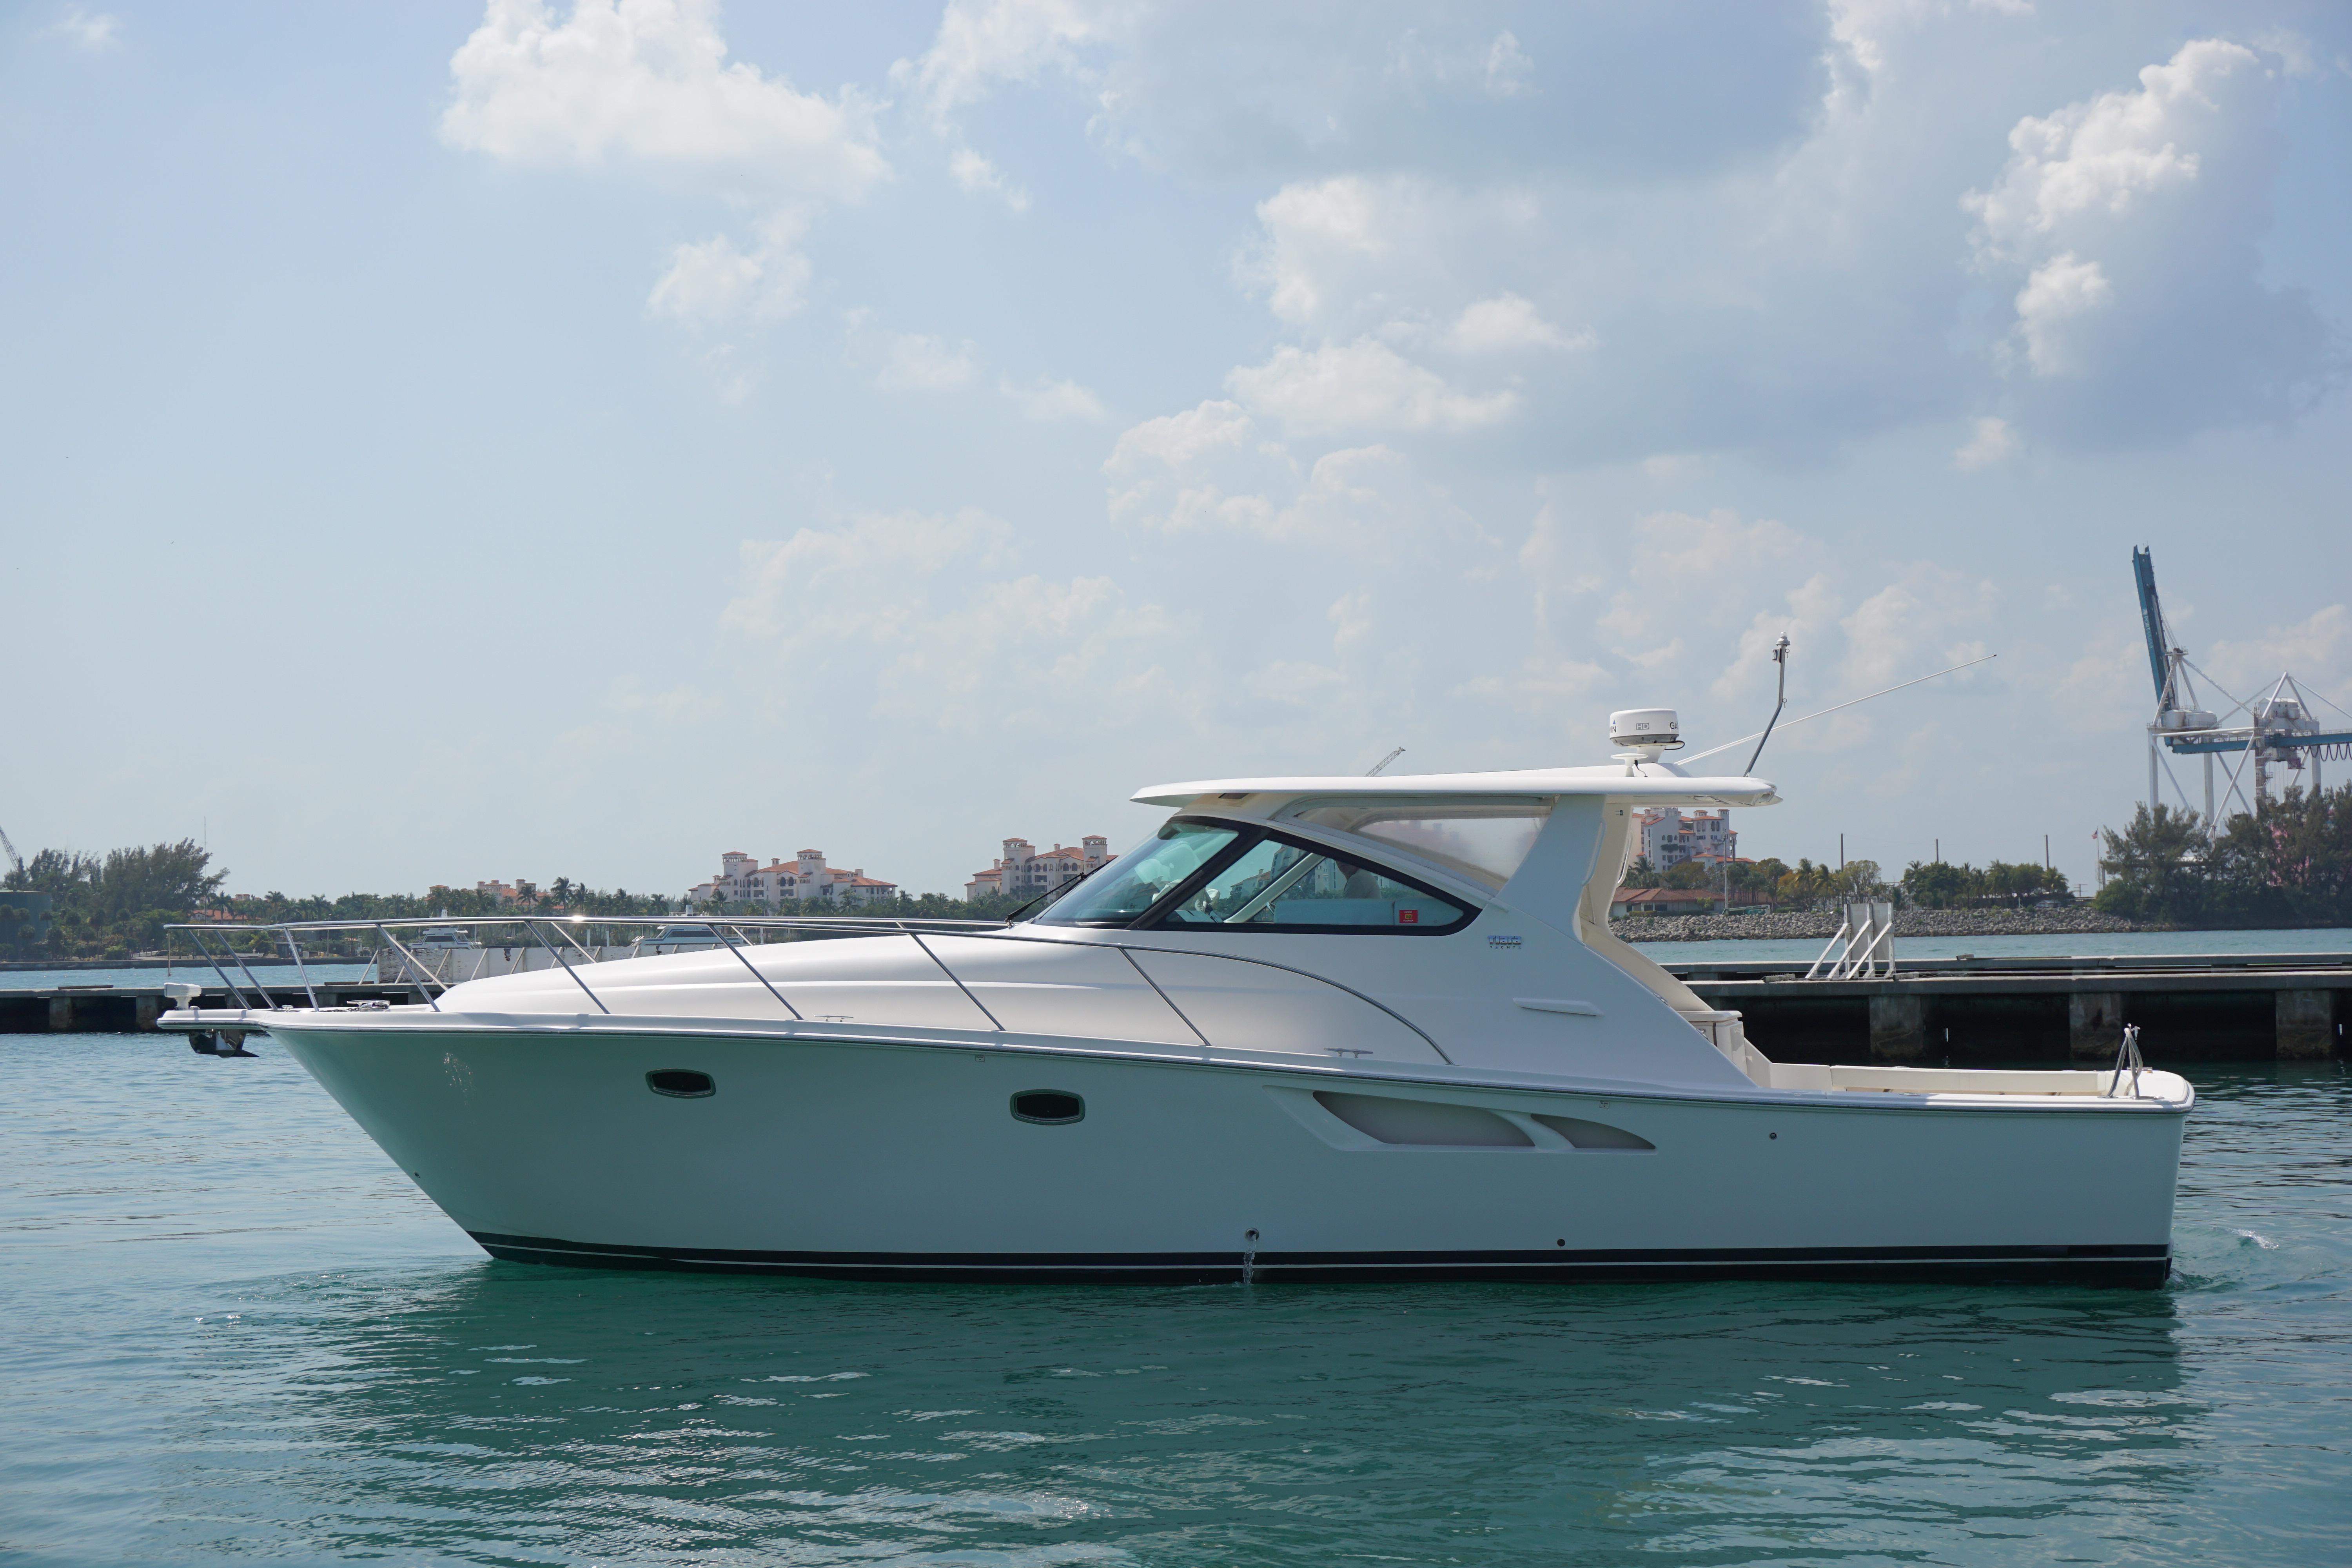 43 Tiara Yachts 2016 SEA LA VIE Mystic, Connecticut Sold on 2020